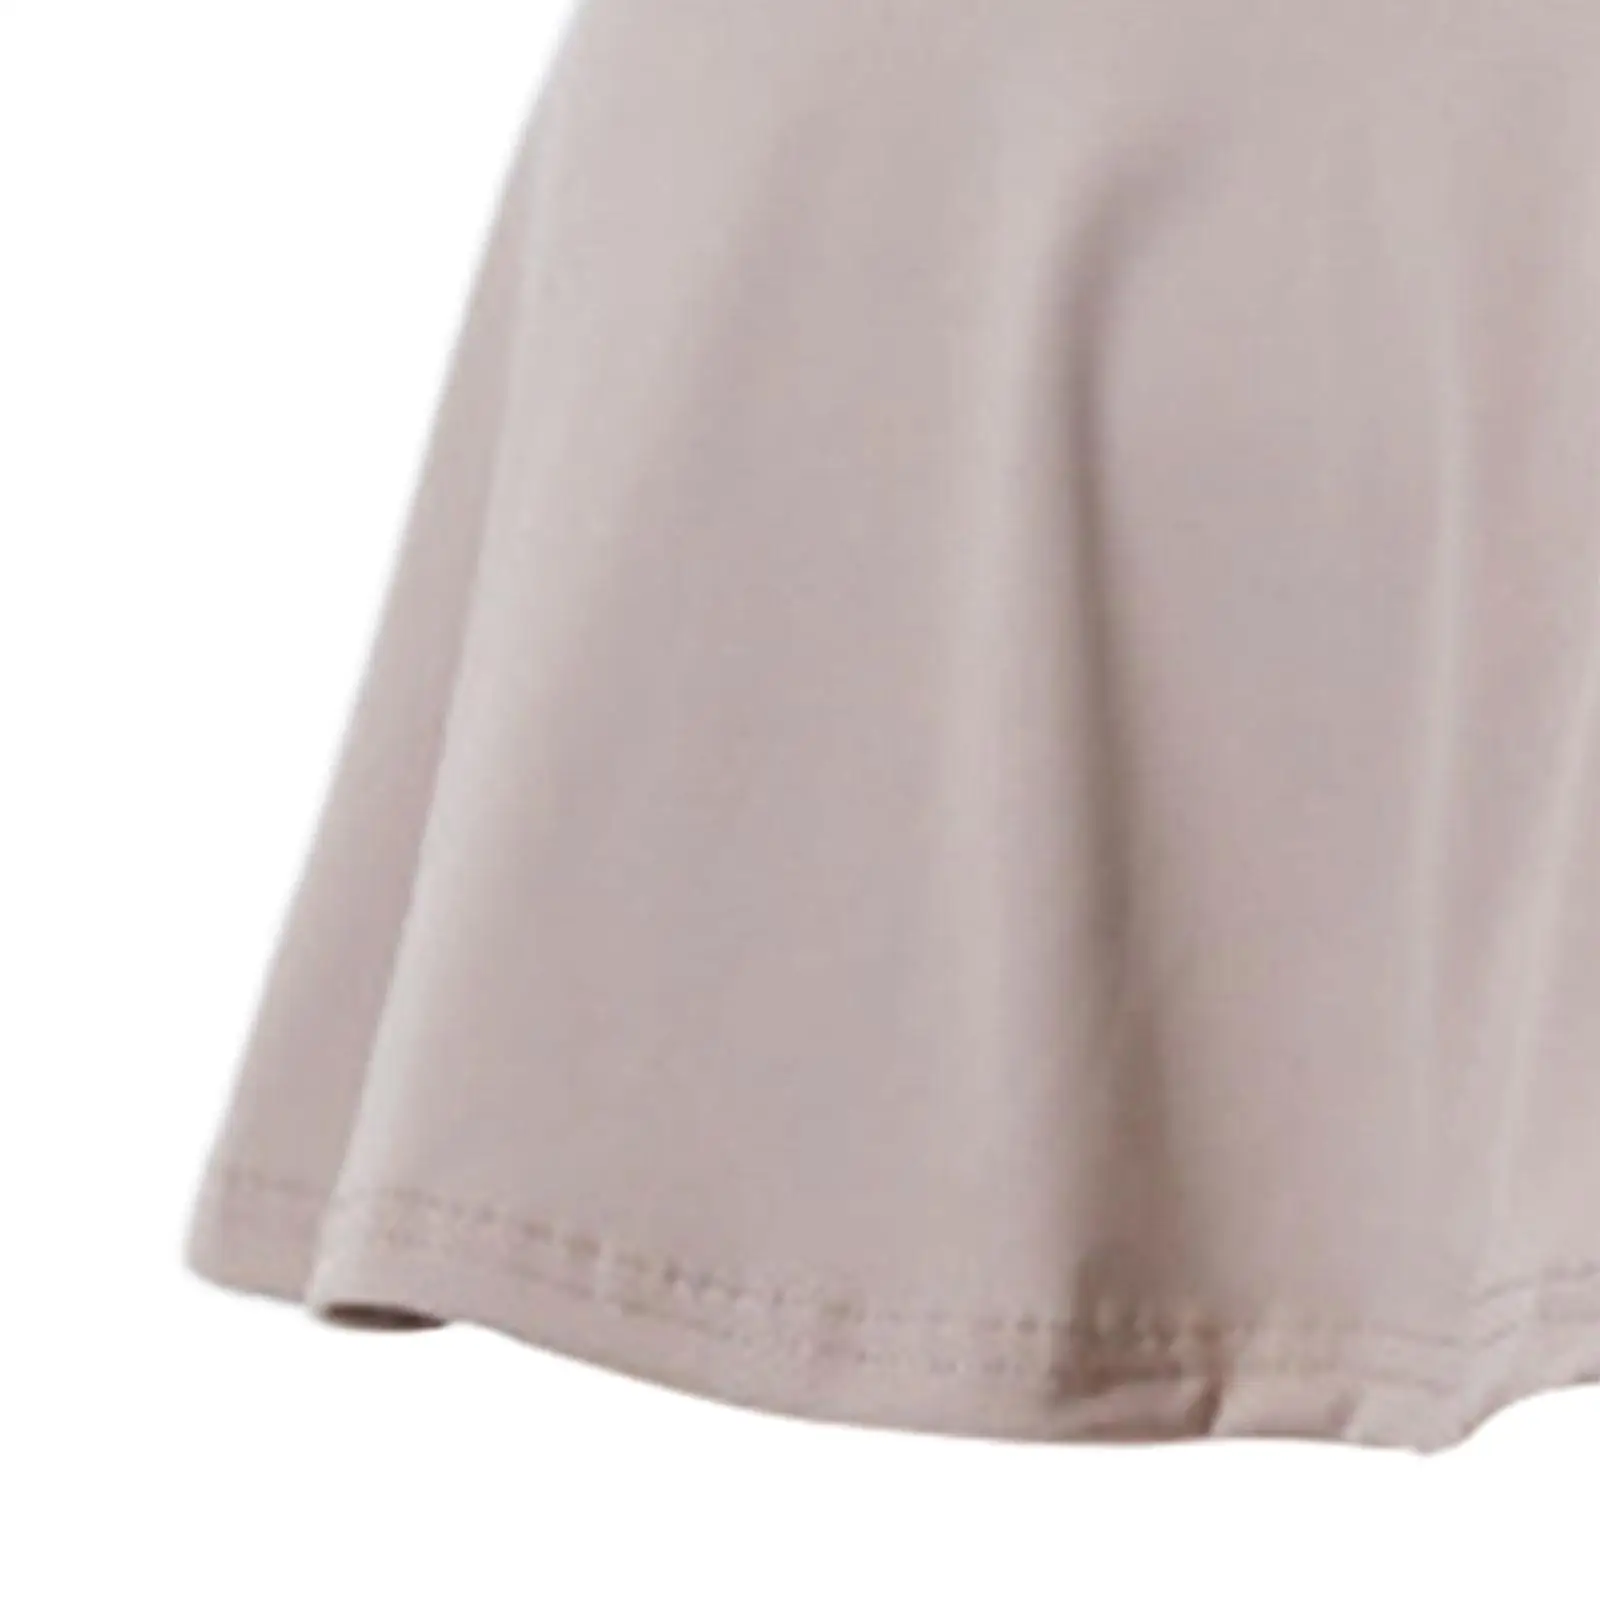 Tennis Skirts Short Skirt Comfortable Breathable Activewear Women`s Culottes Skirt for Running Golf Exercise Summer Sport